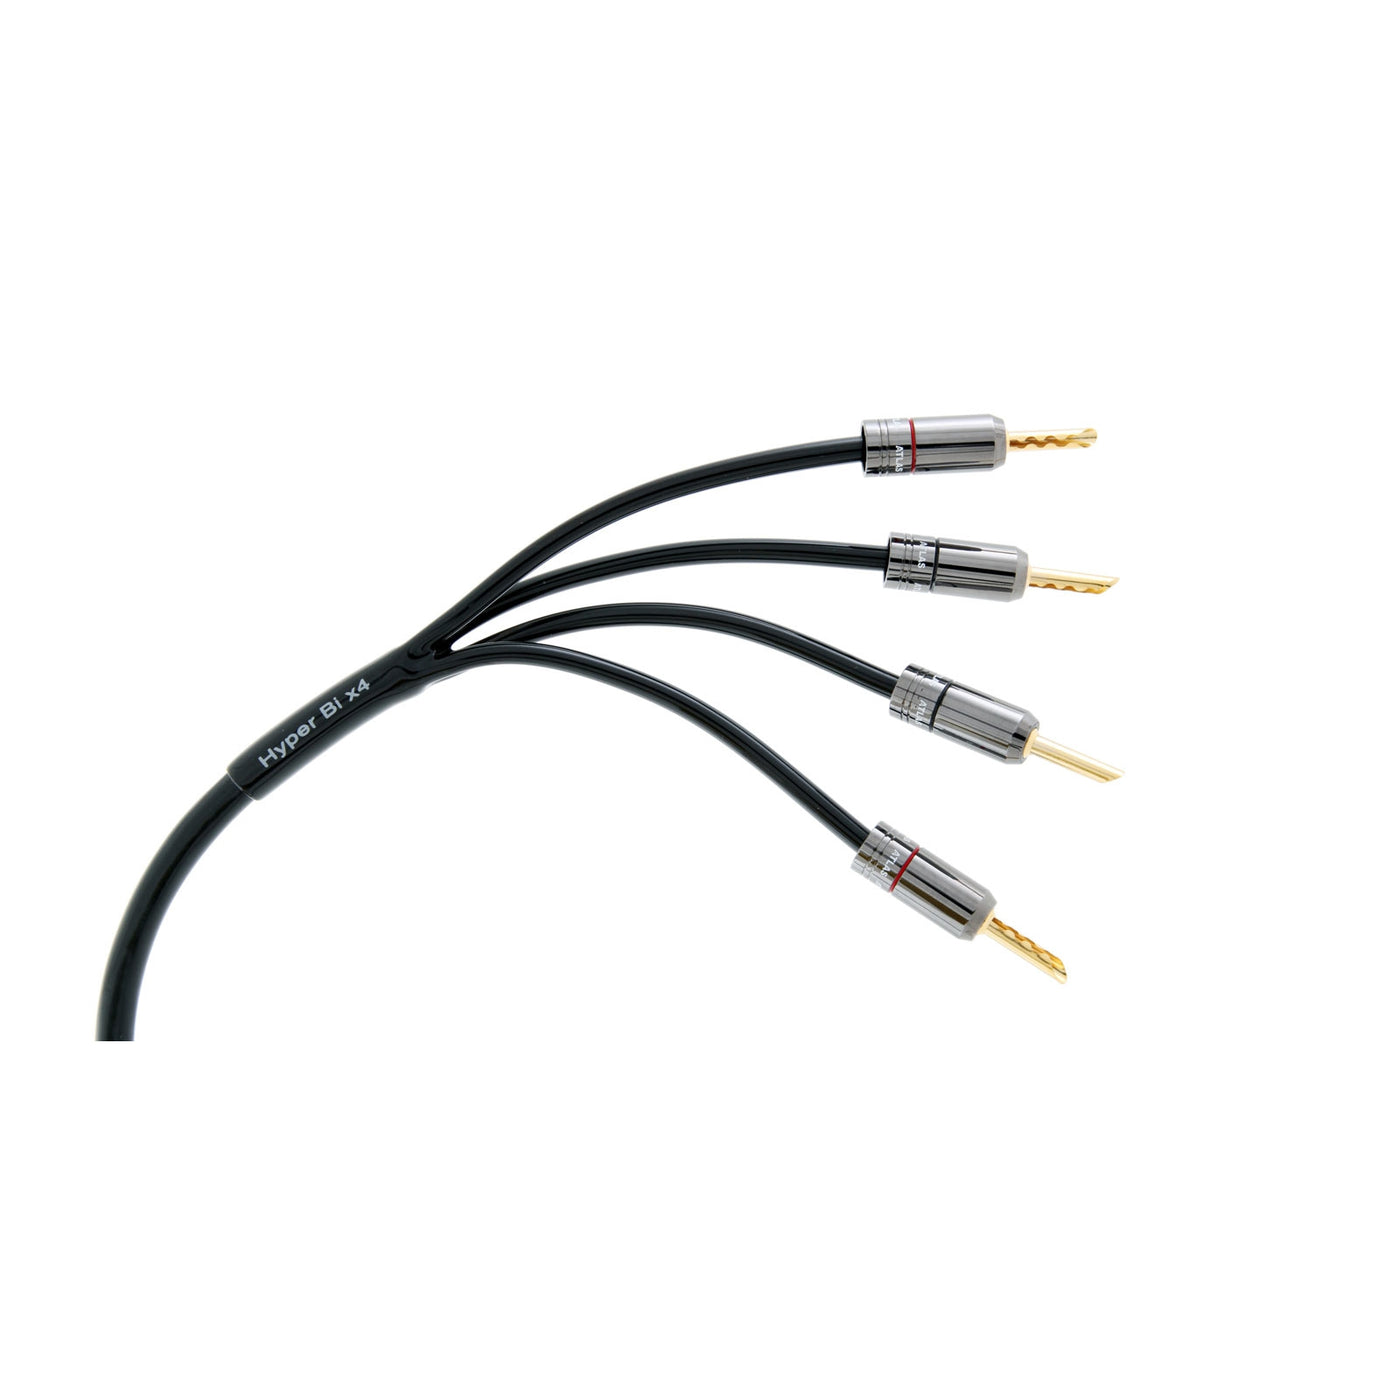 Atlas Hyper Bi-Wire Speaker Cable (50mt reel) at Audio Influence